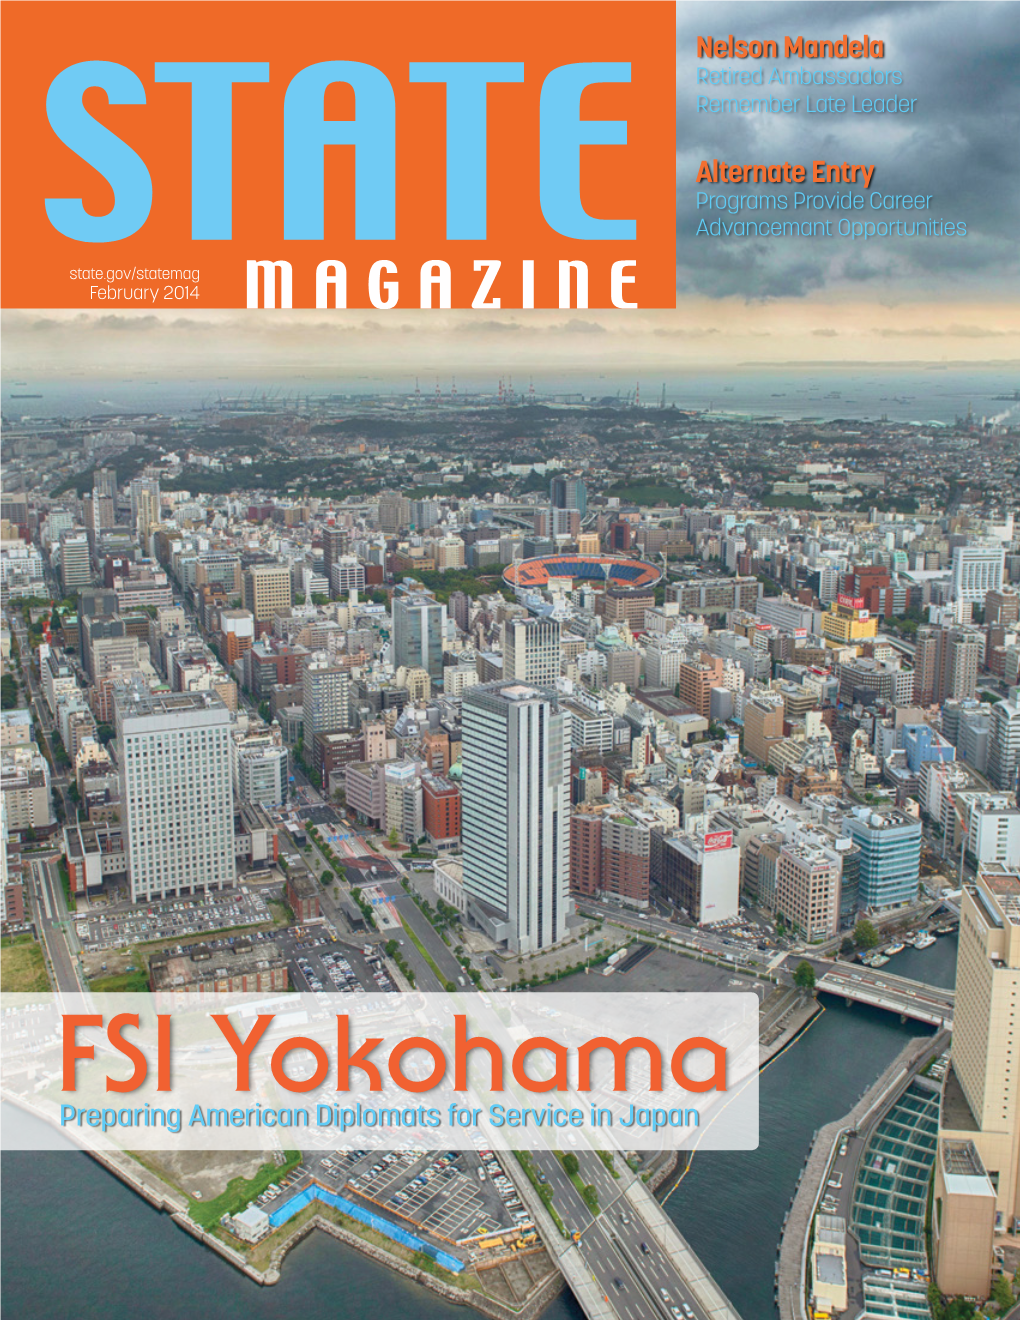 FSI Yokohama Preparing American Diplomats for Service in Japan February 2014 // Issue Number 586